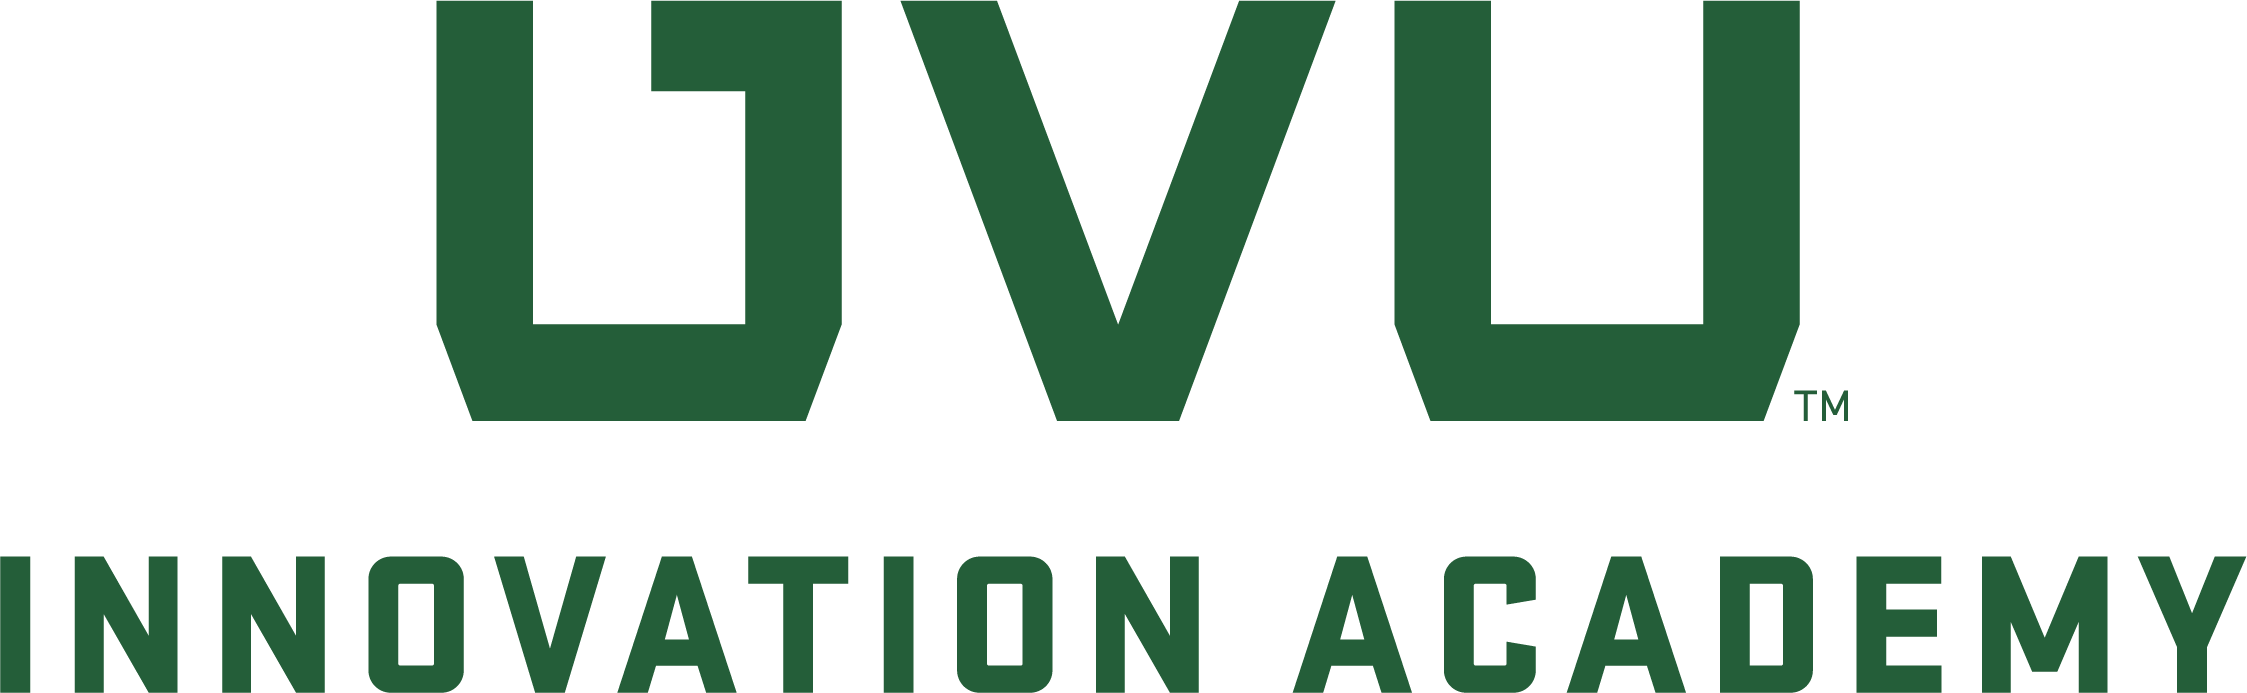 green innovation academy logo